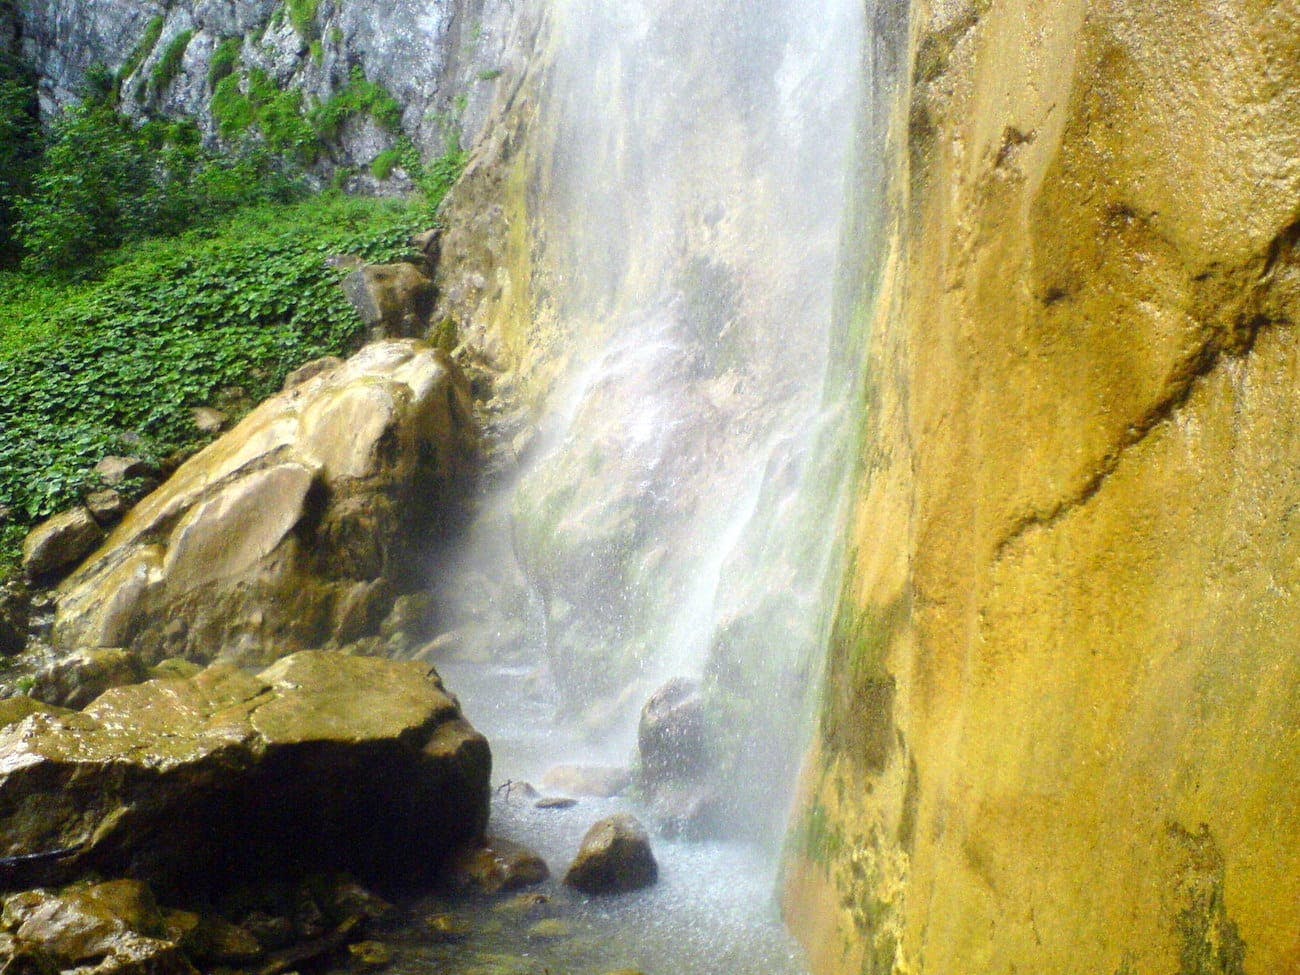 Skakavac Waterfall - Sutjeska National Park